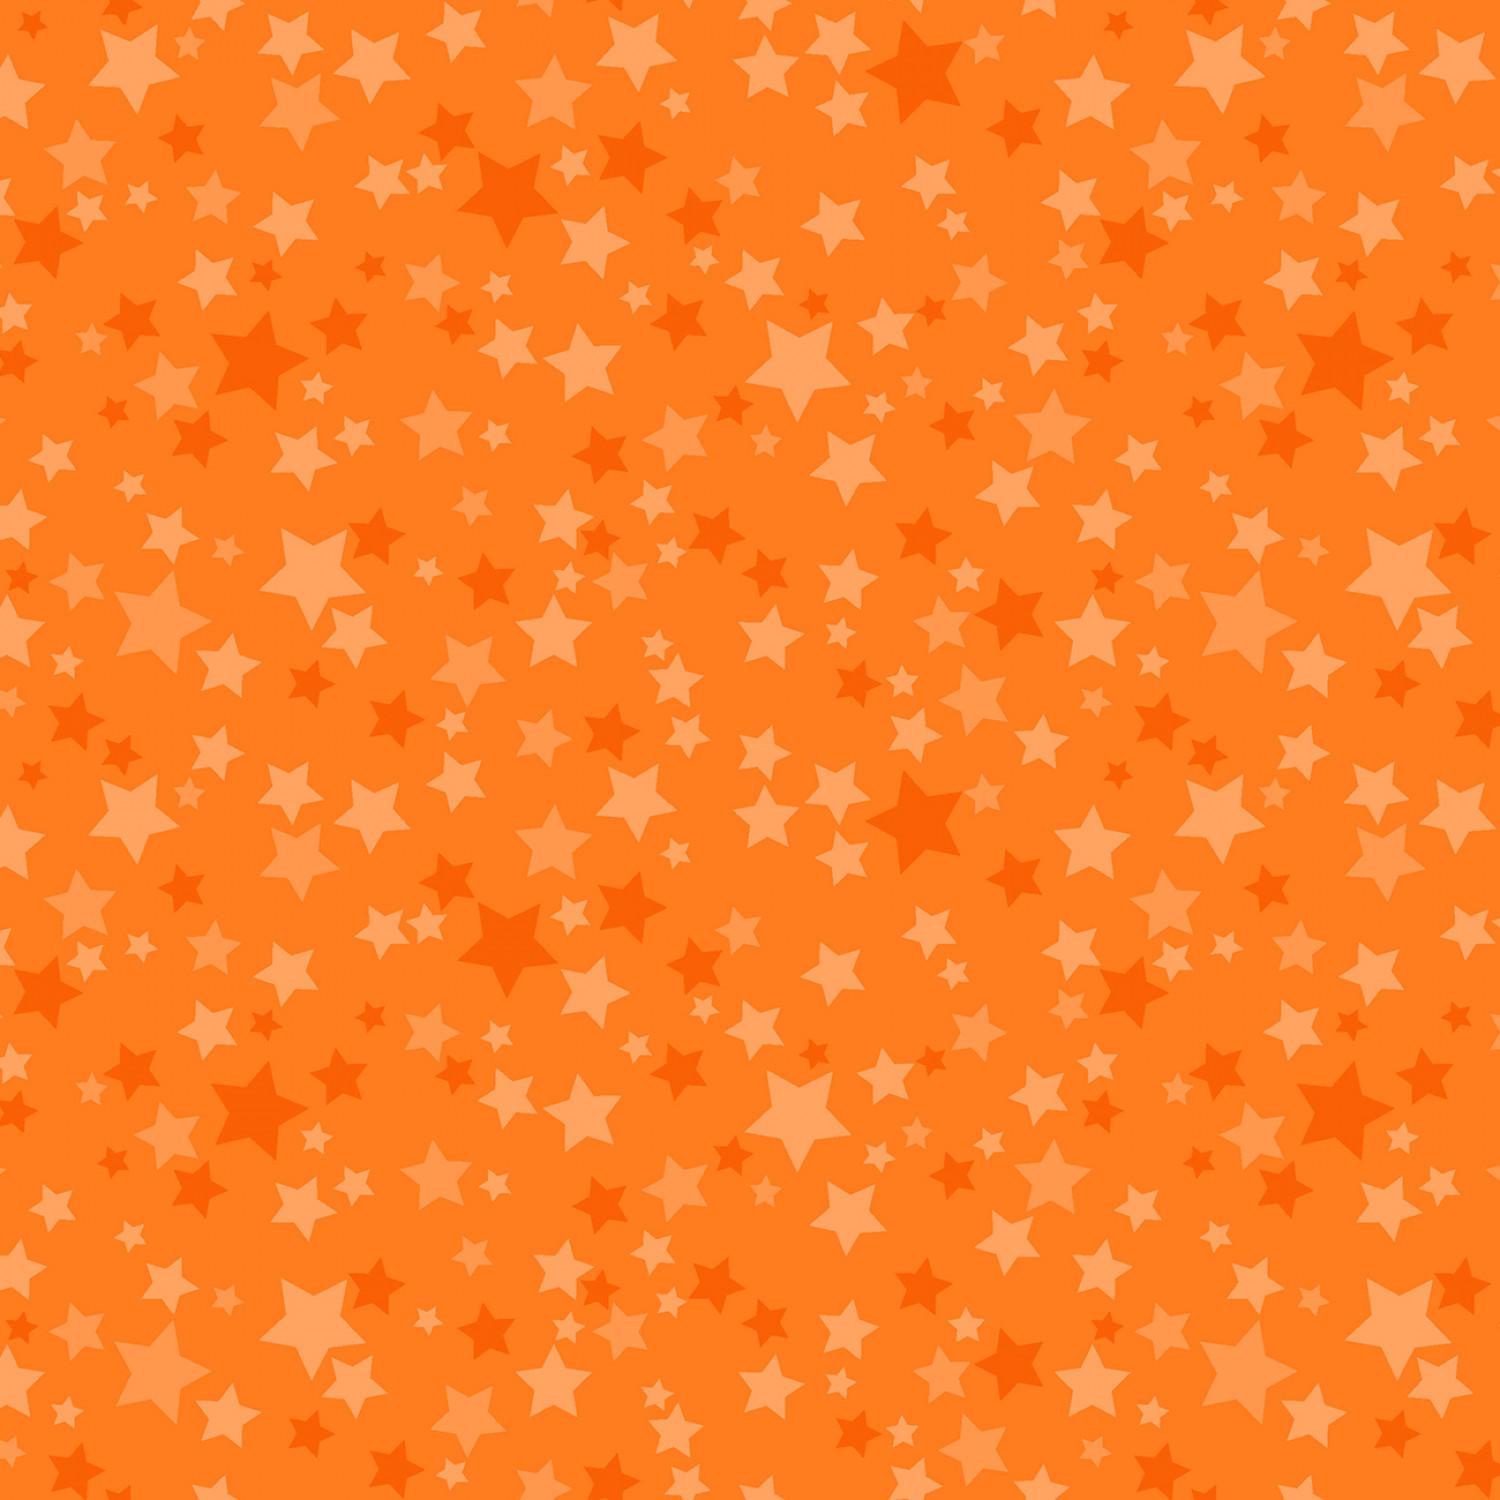 Playtime Flannel - Stars - Orange - MASF10692-O